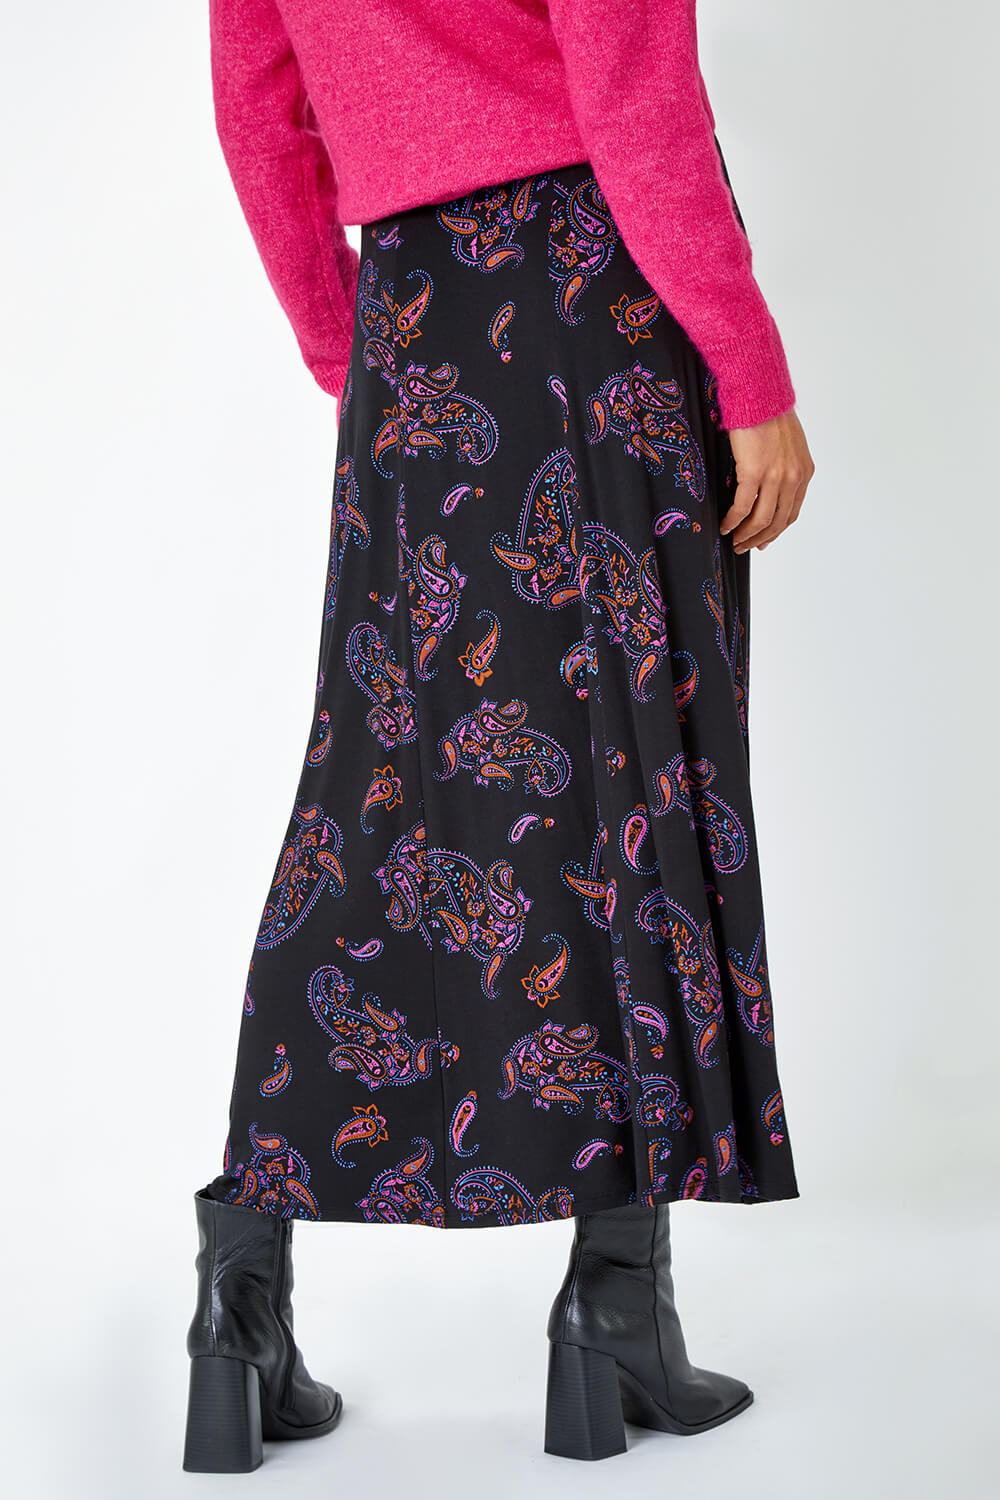 Black Paisley Print Stretch Midi Skirt, Image 3 of 5